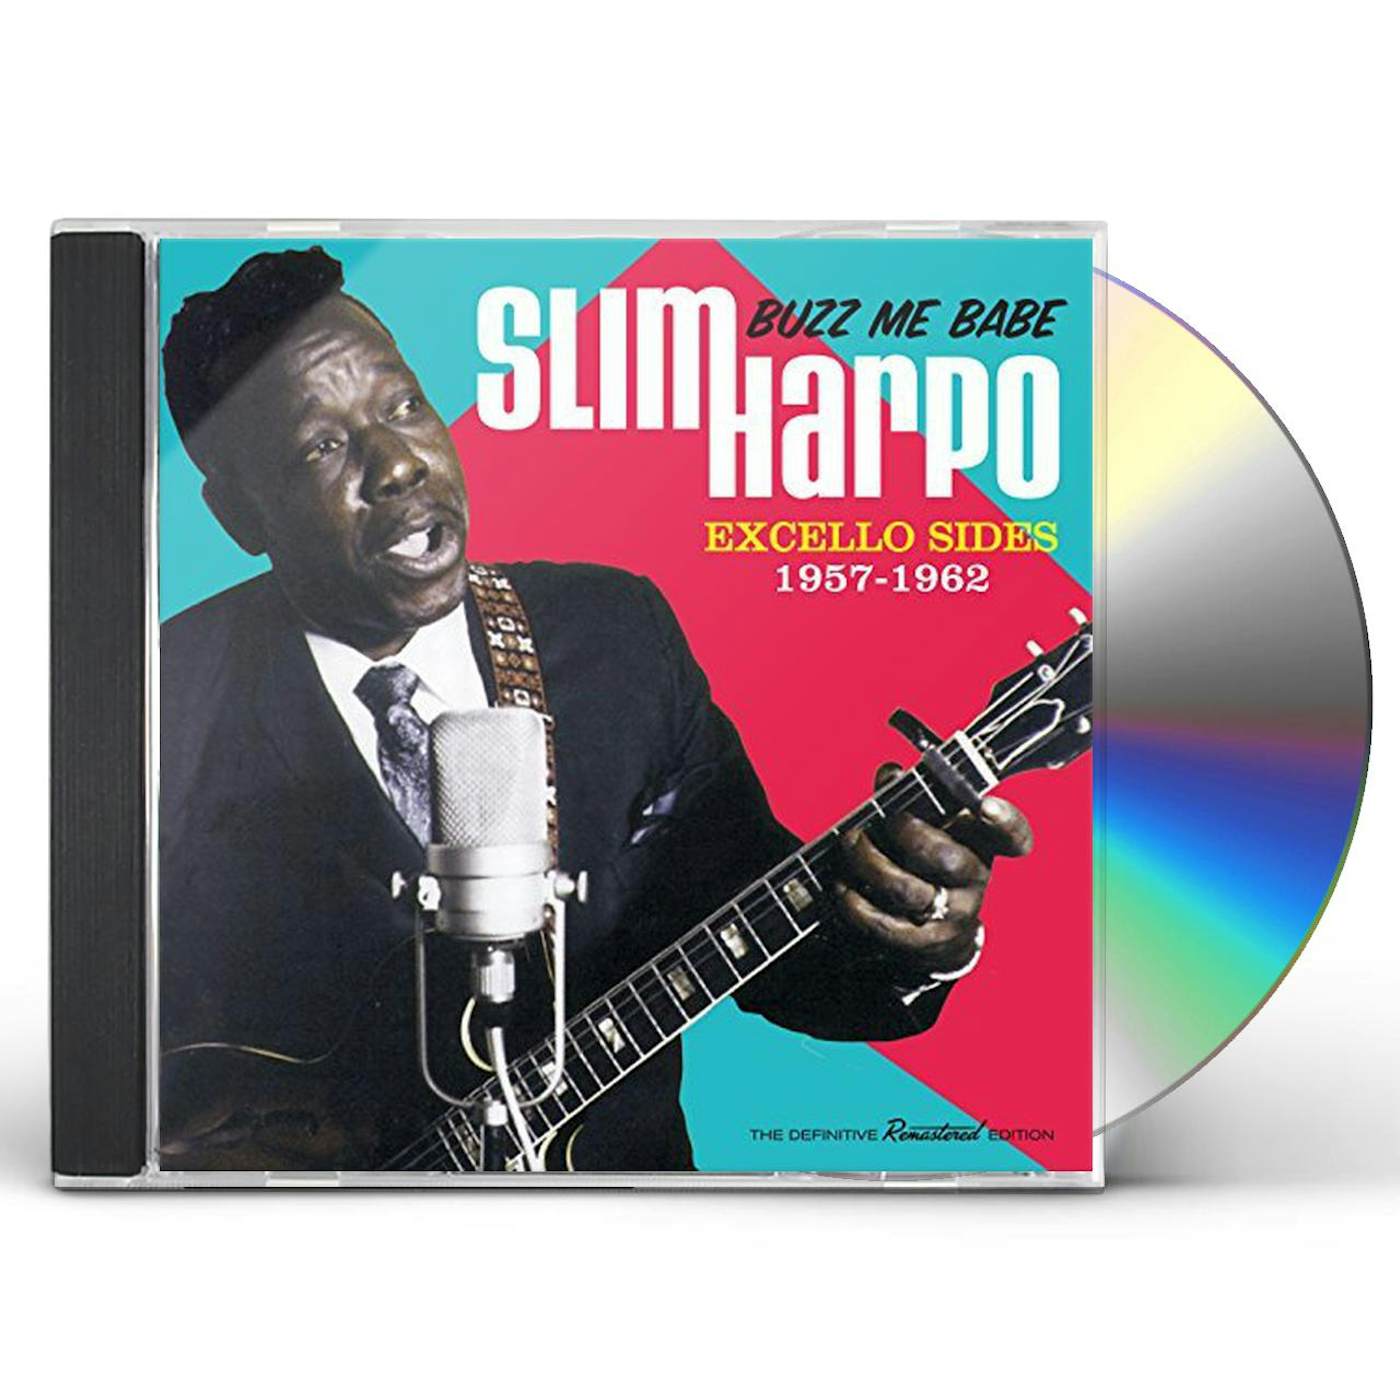 Slim Harpo BUZZ ME BABE - EXCELLO SIDES 1957-1962 CD